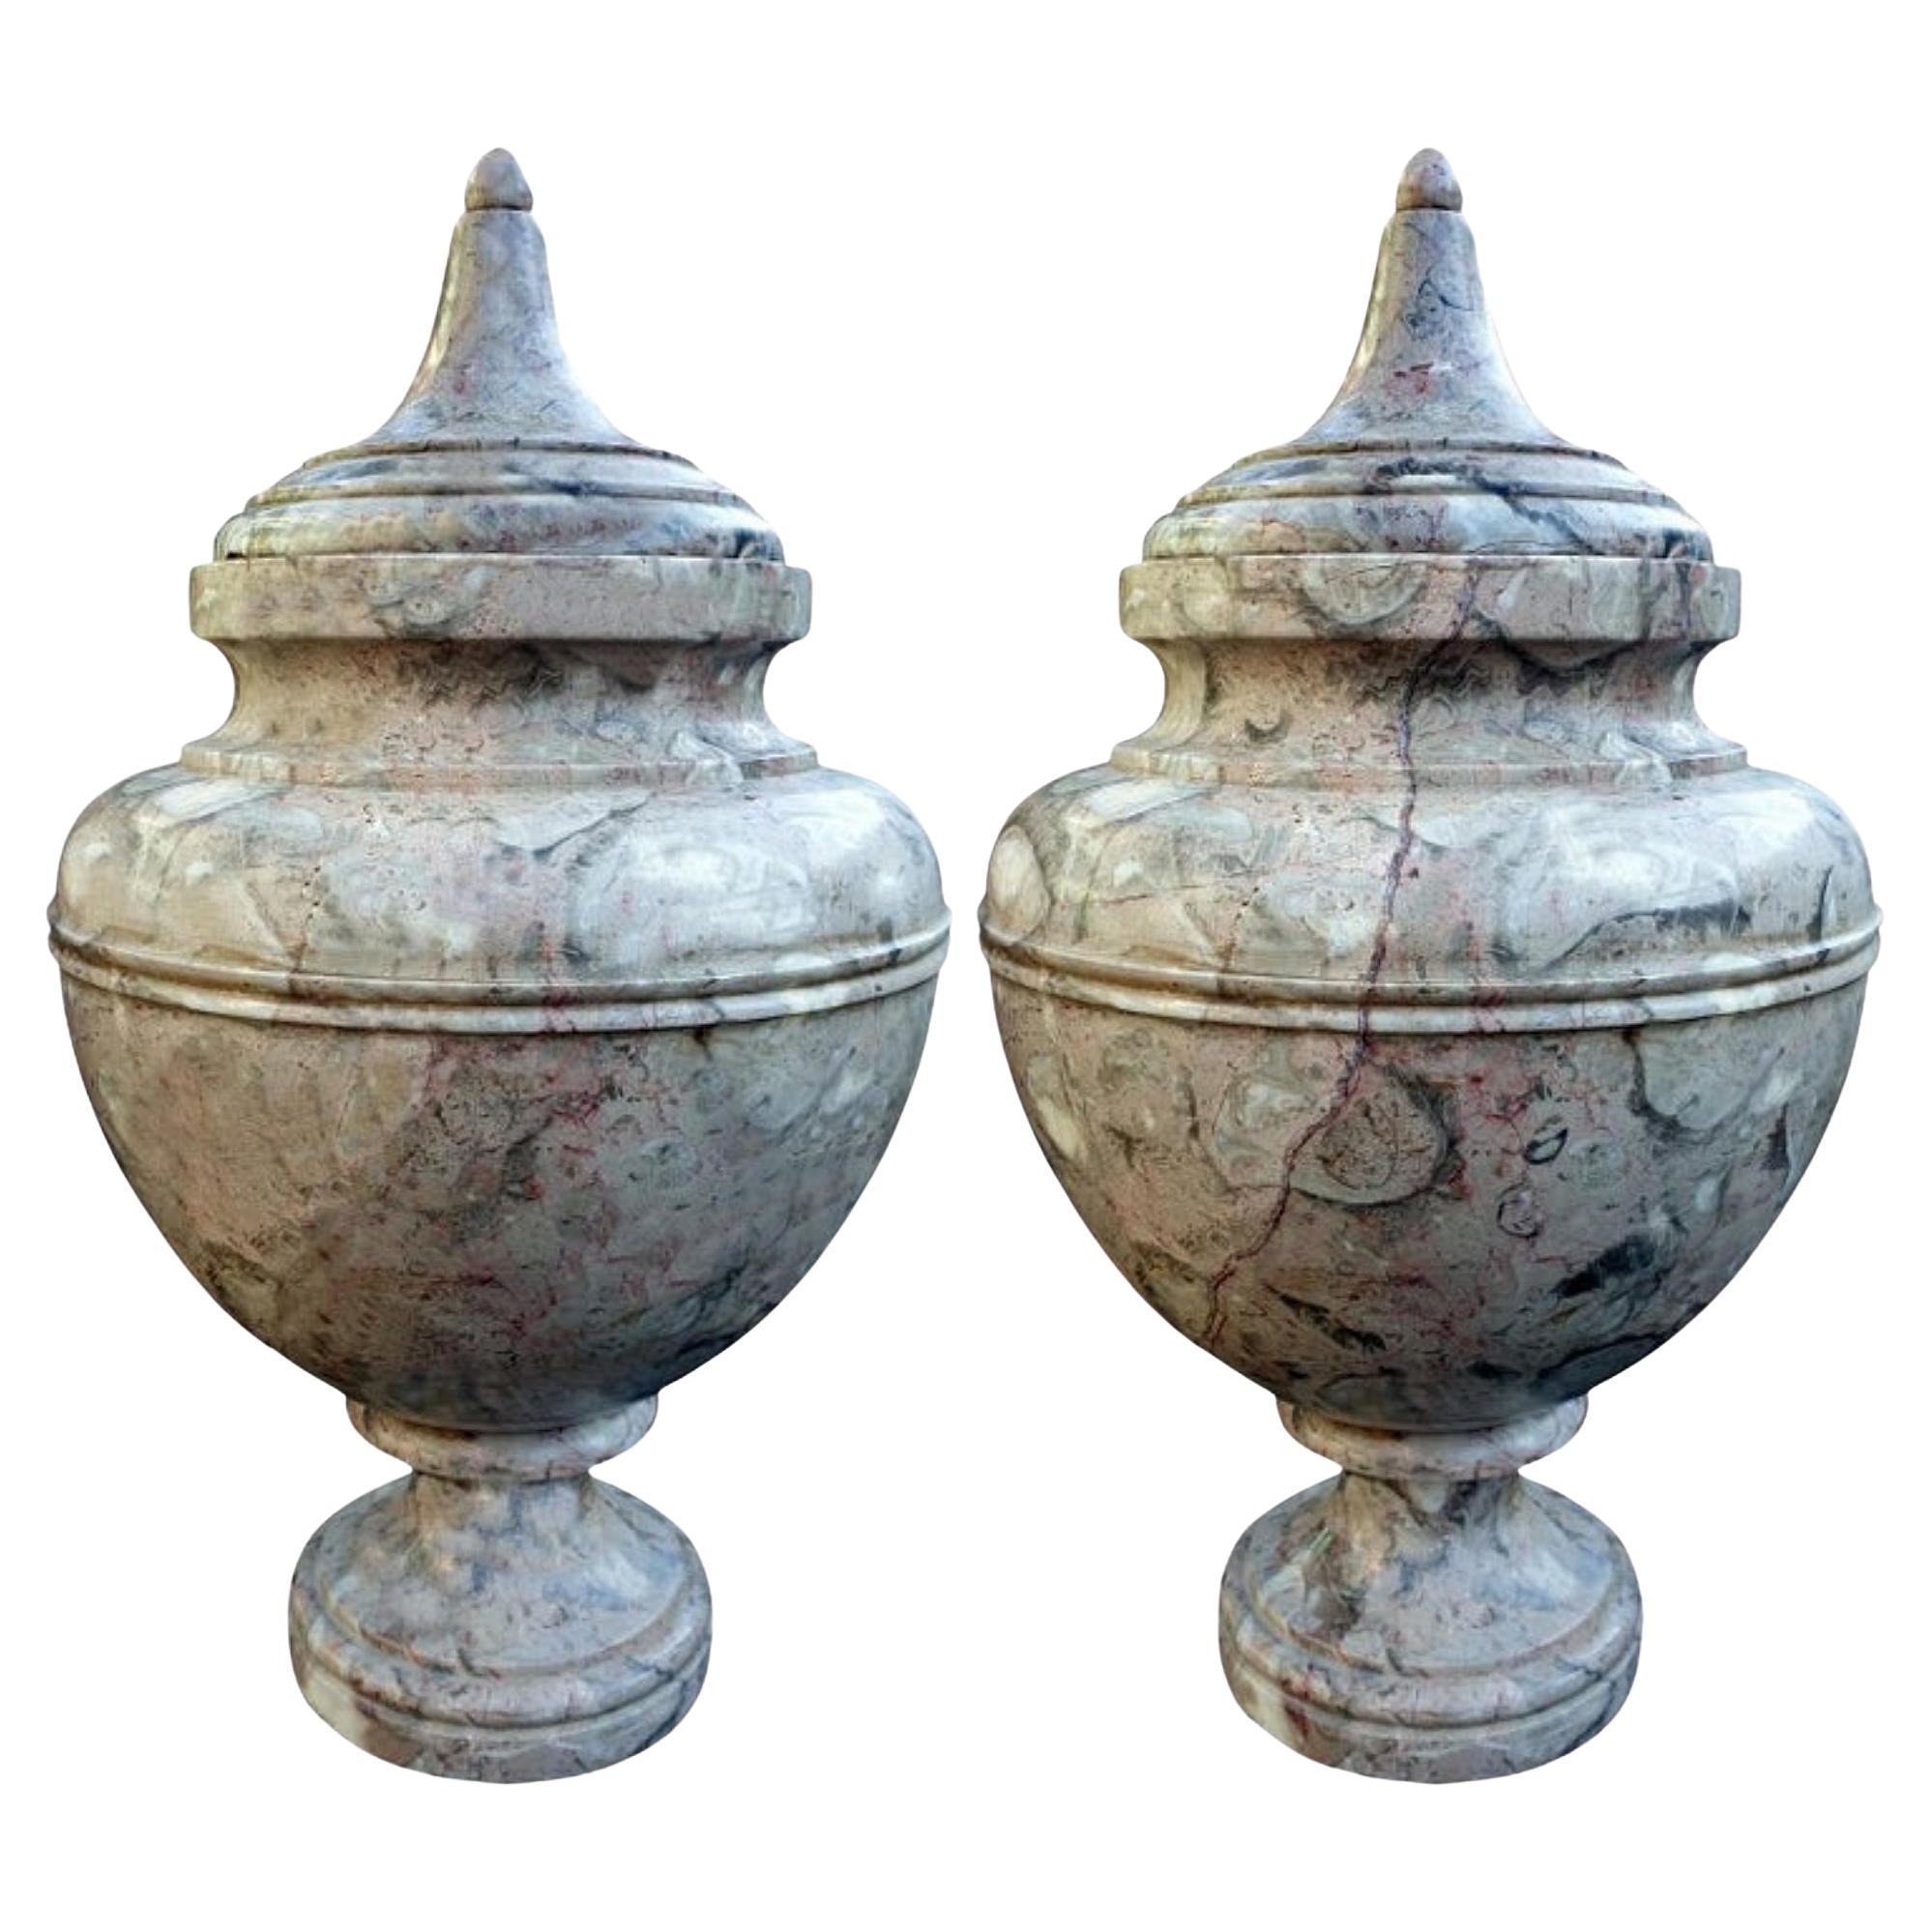 Amazing Pair of Turned Vases in Italian Lumachella Marble, Early 20th Century